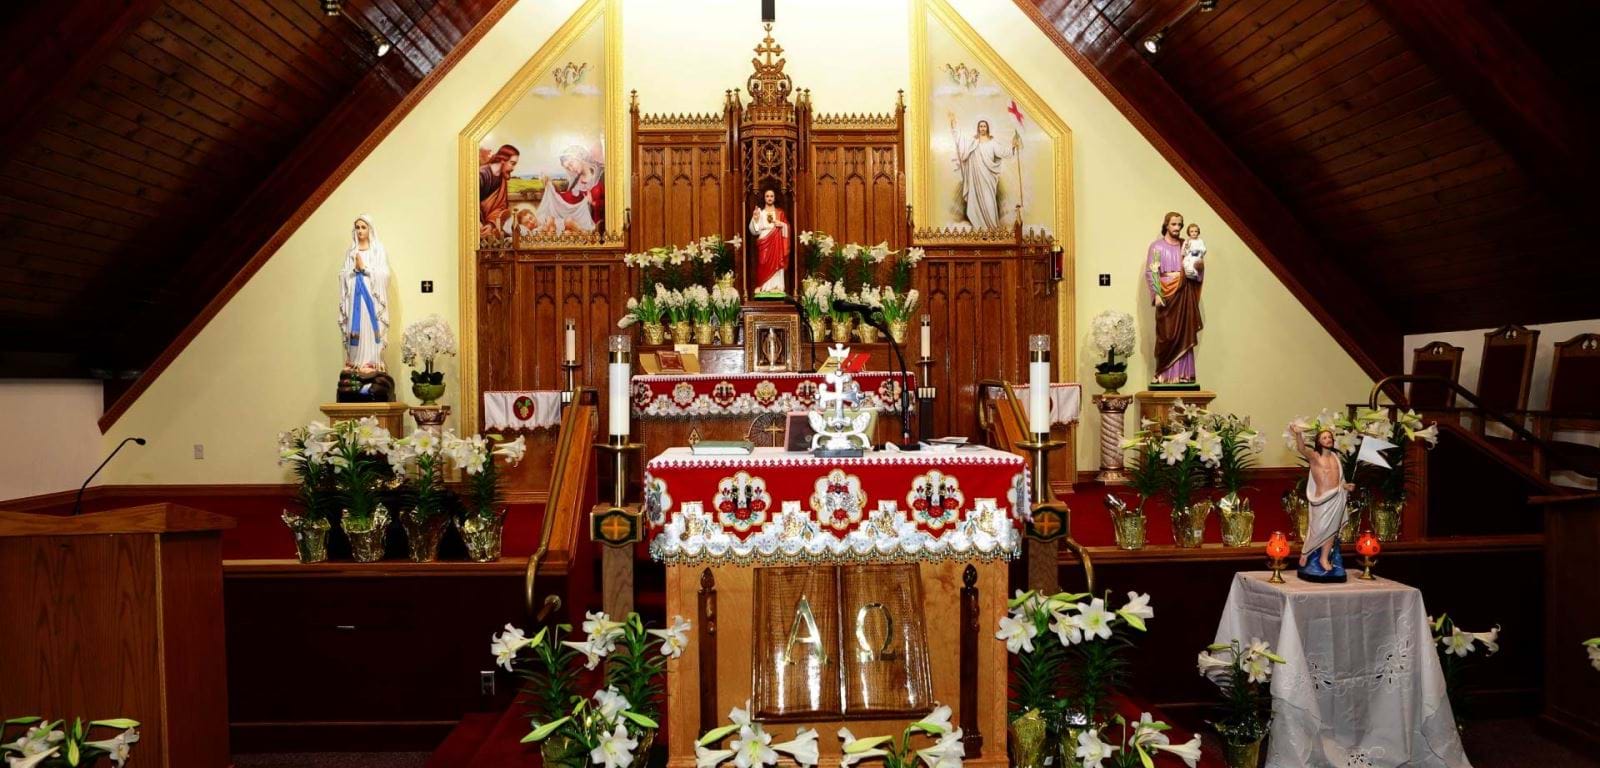 slider image - St.Mary's Syro-Malabar Catholic Church, Long Island, NY